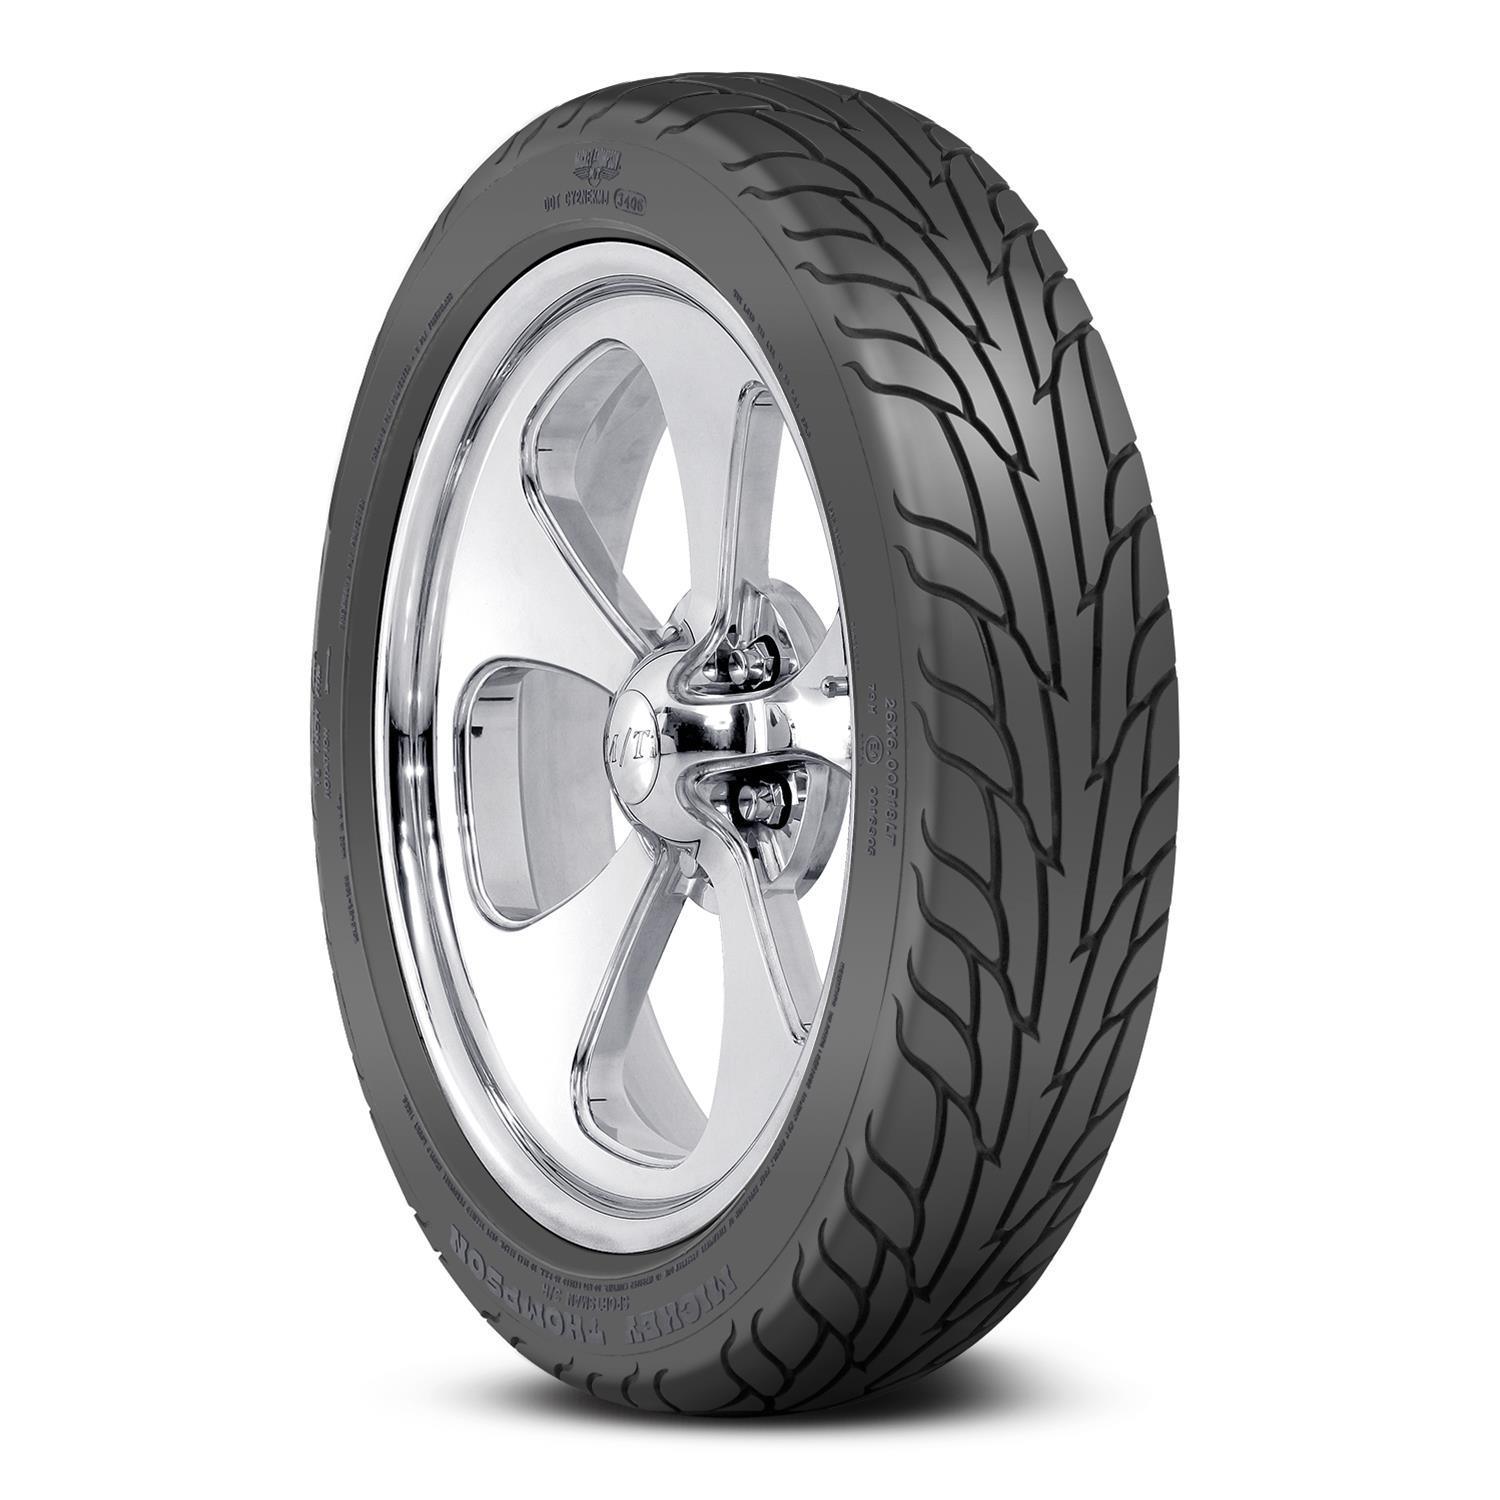 26x6.00R-18LT Sportsman S/R Radial Tire - Burlile Performance Products